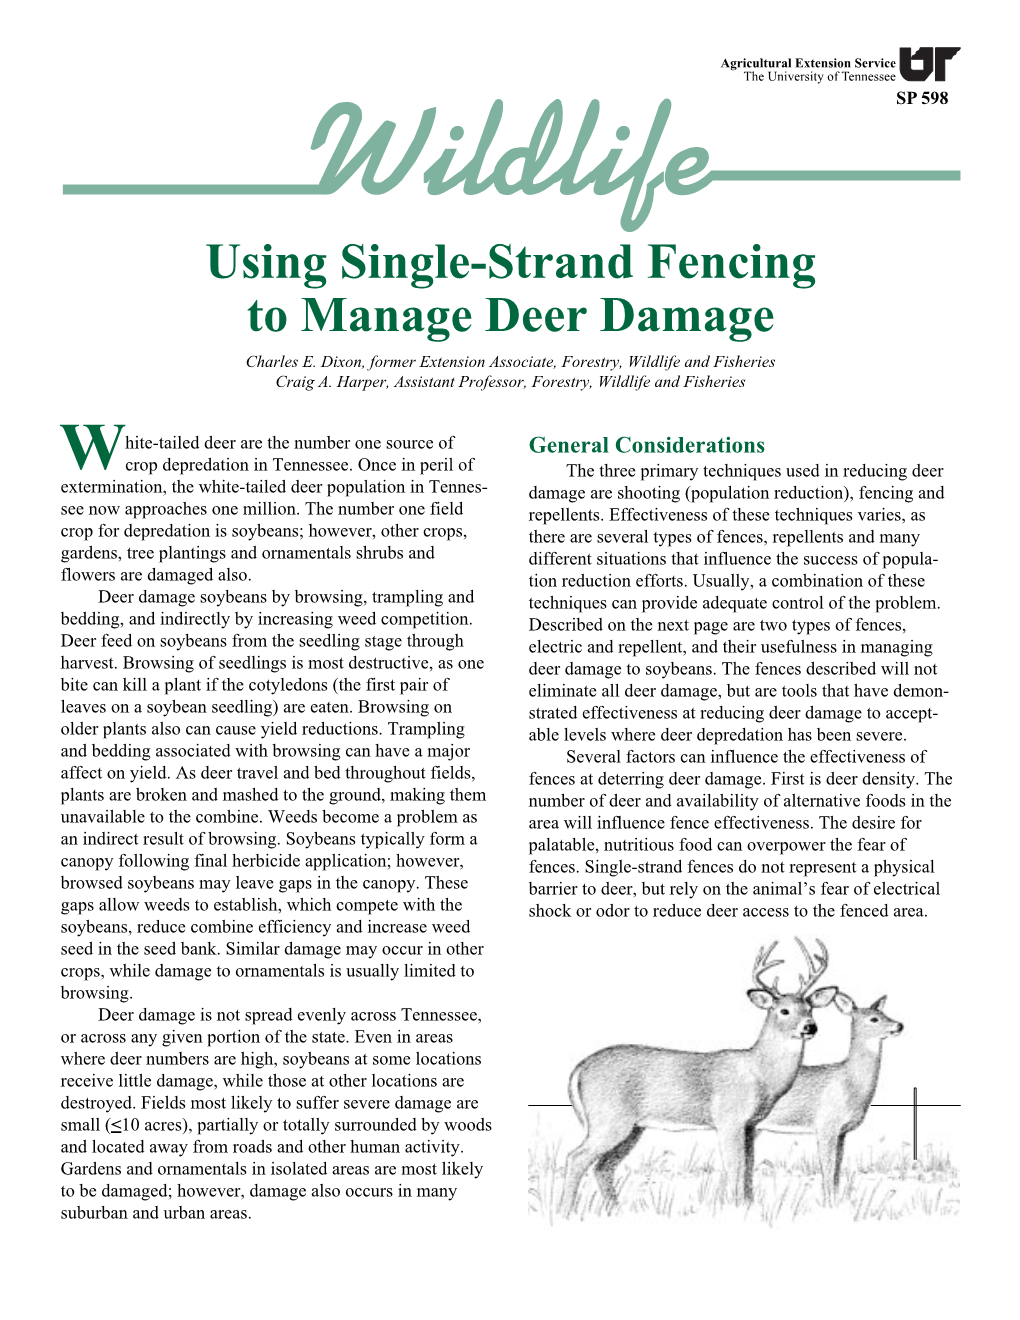 Wildlife Using Single-Strand Fencing to Manage Deer Damage Charles E